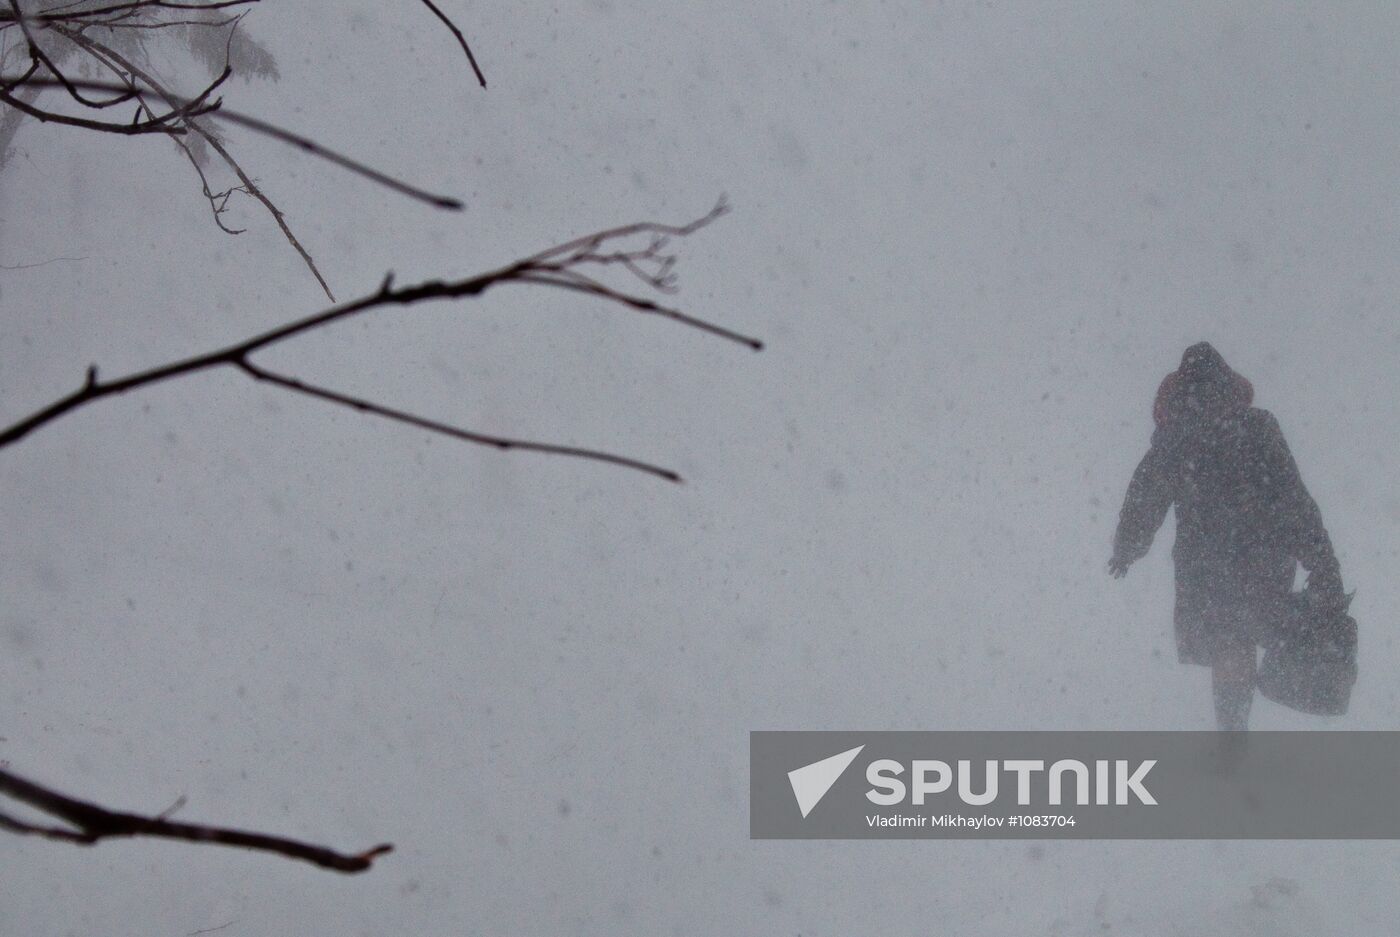 Snow storm in Yuzhno-Sakhalinsk